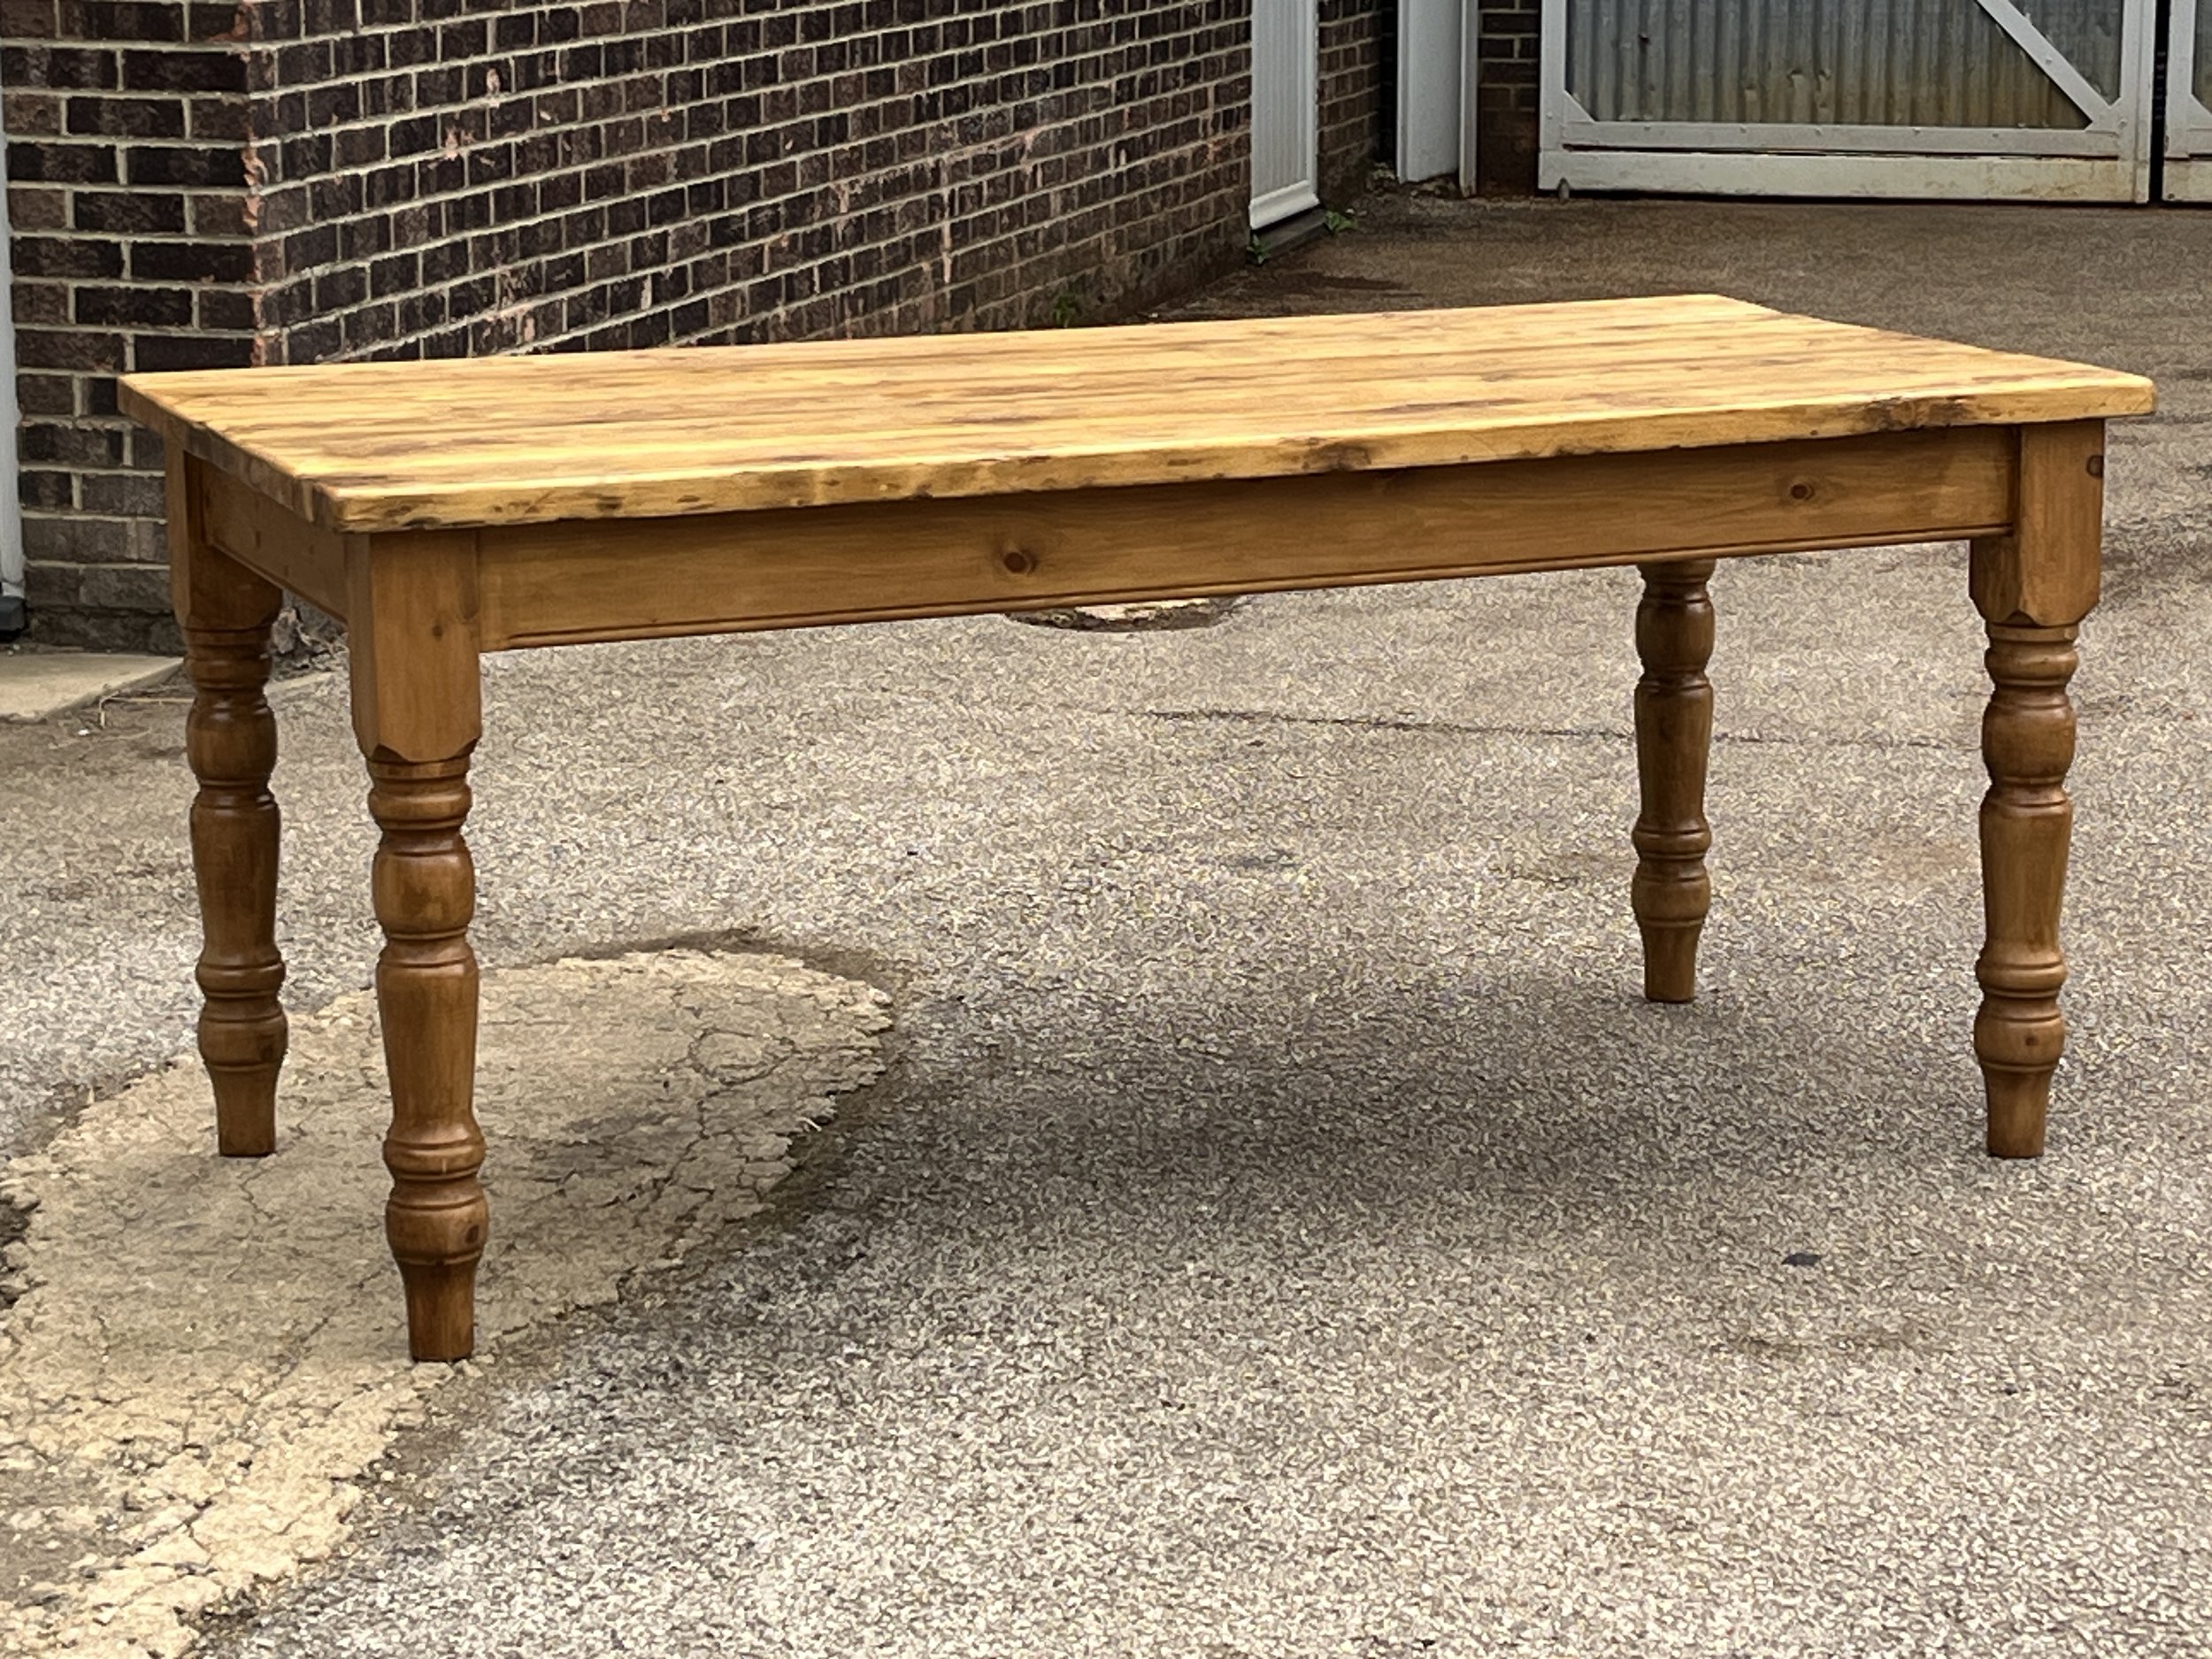 Custom pine table with turned legs